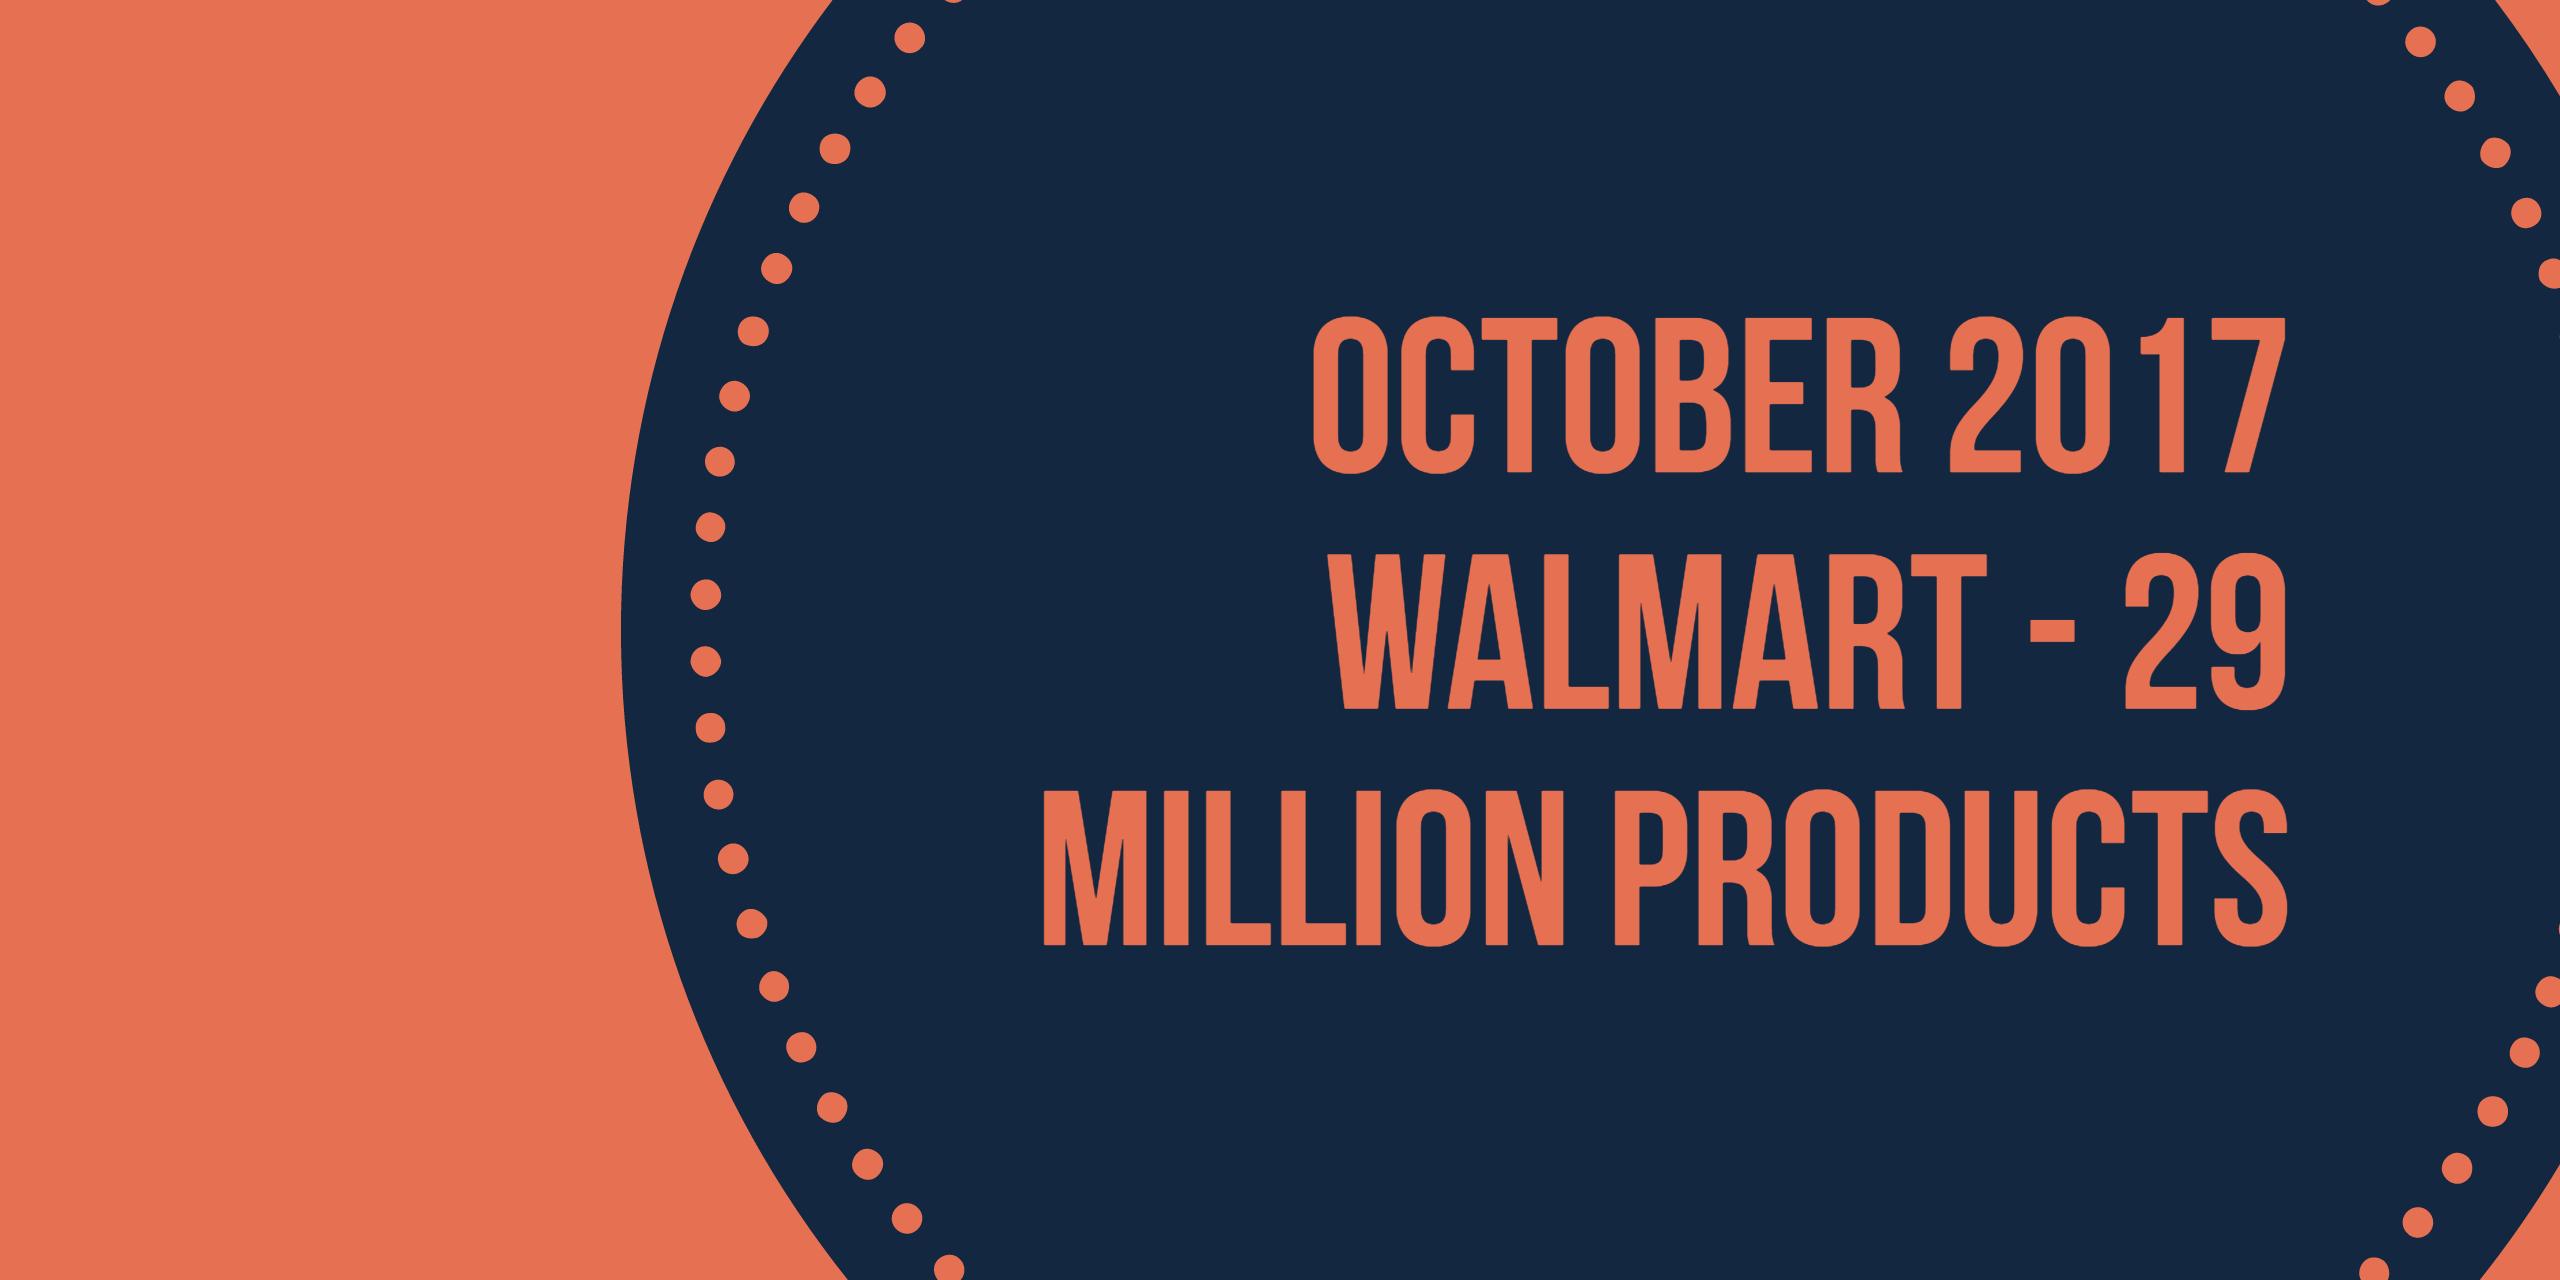 Amazon vs Walmart- Product Sold in October 2017